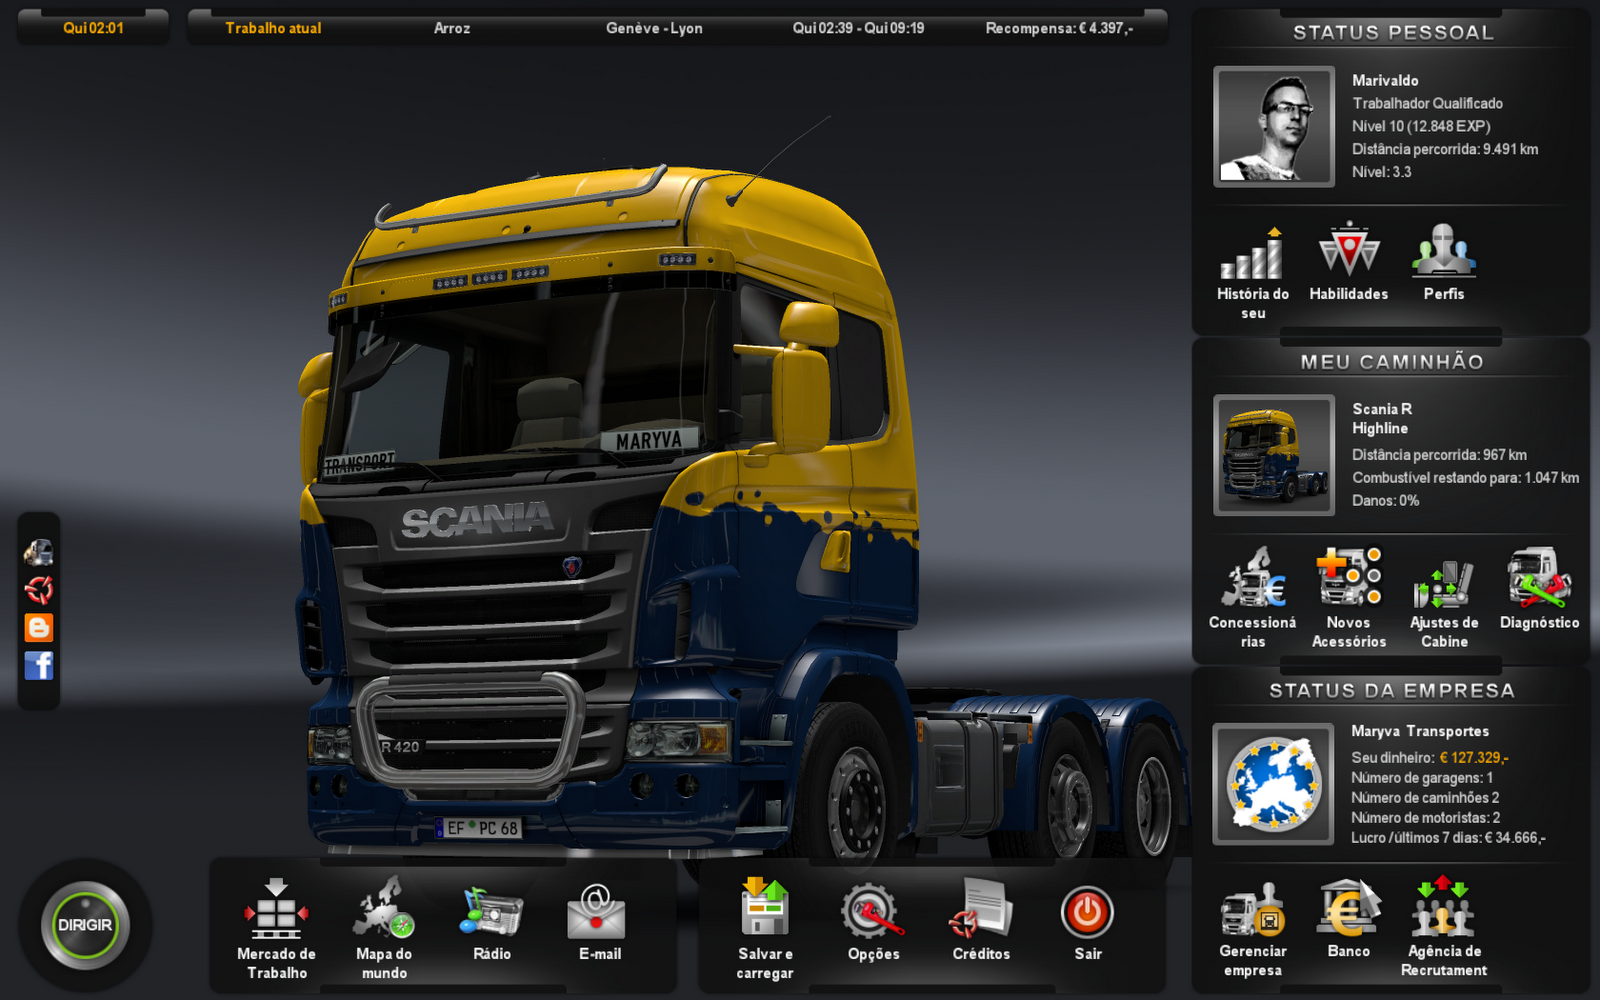 can my pc run euro truck simulator 2